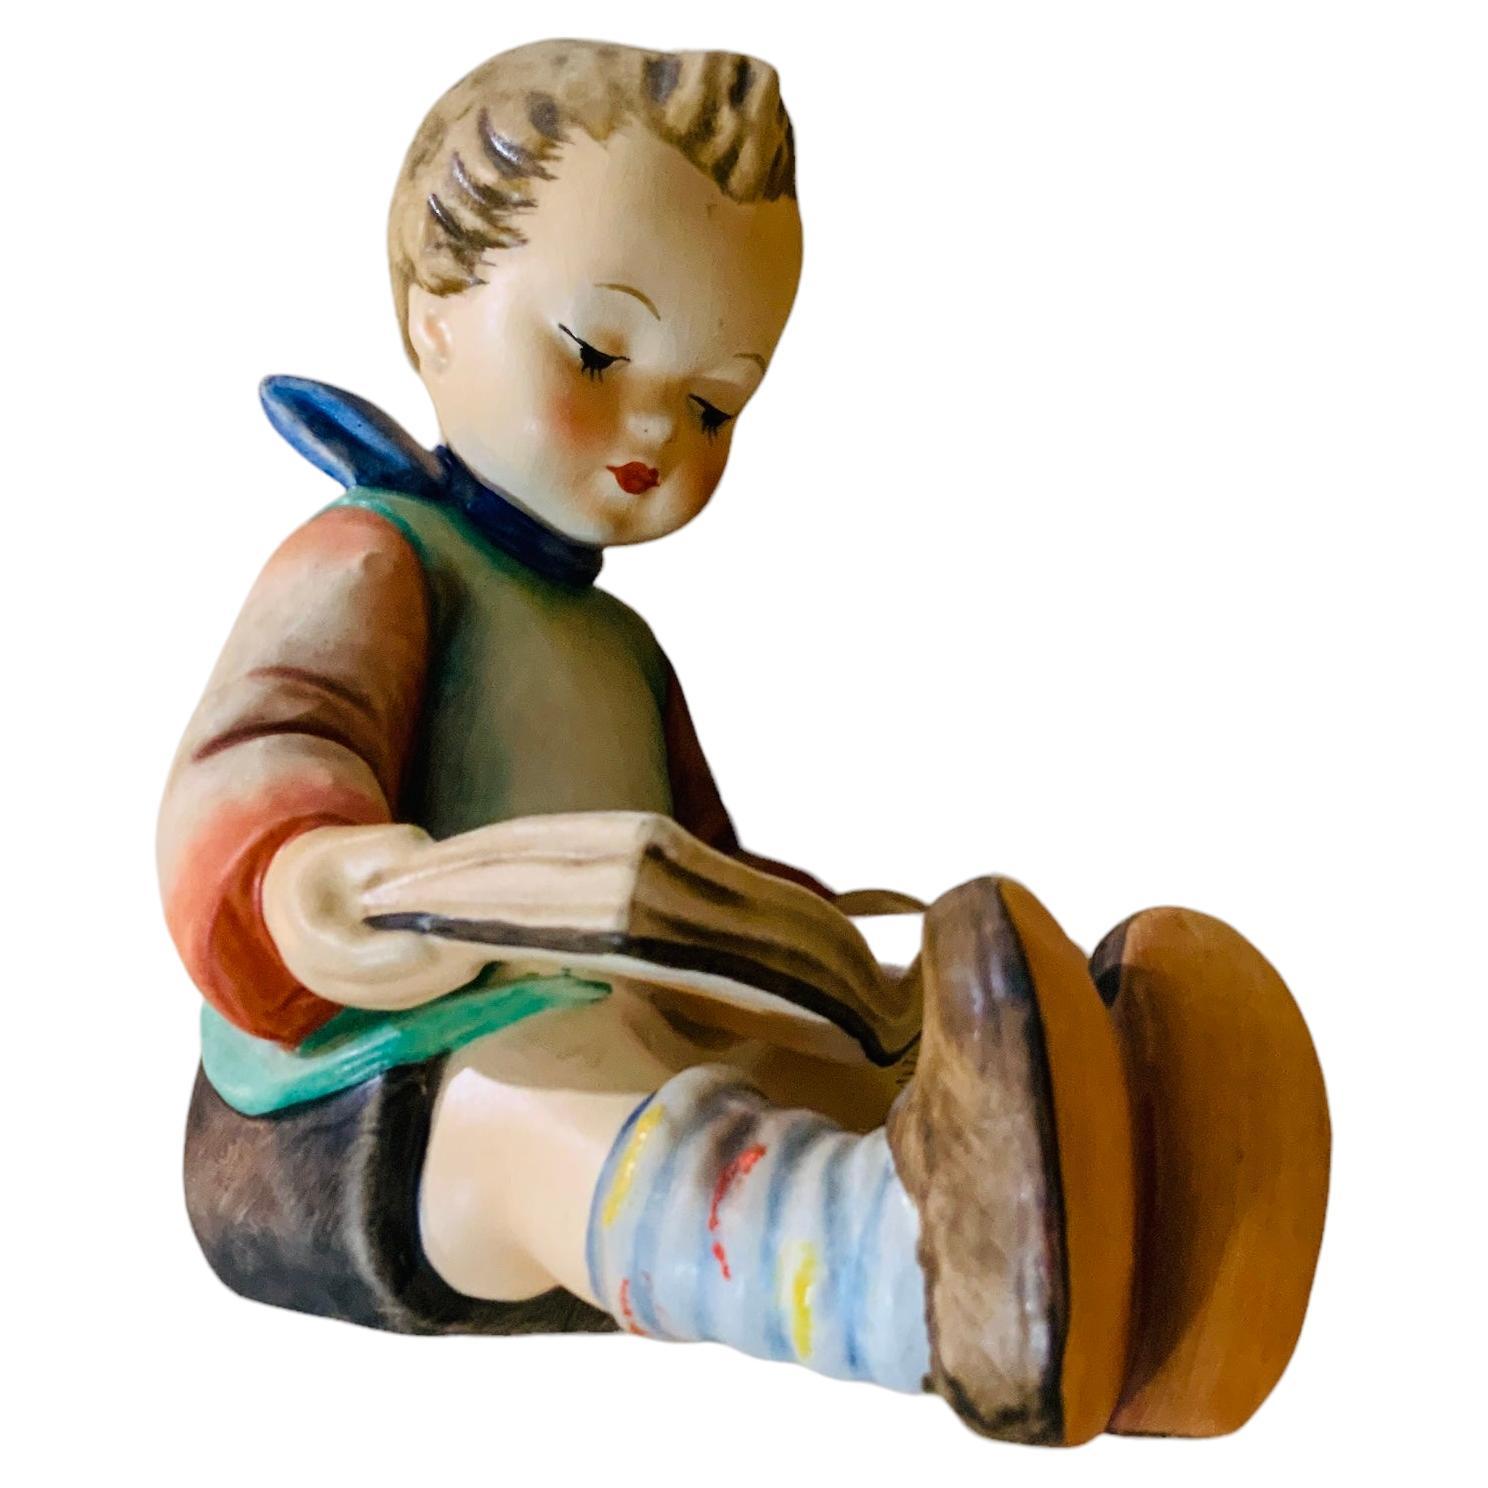 Goebel Company Hummel-Porzellanfigur eines Lesenden Jungen